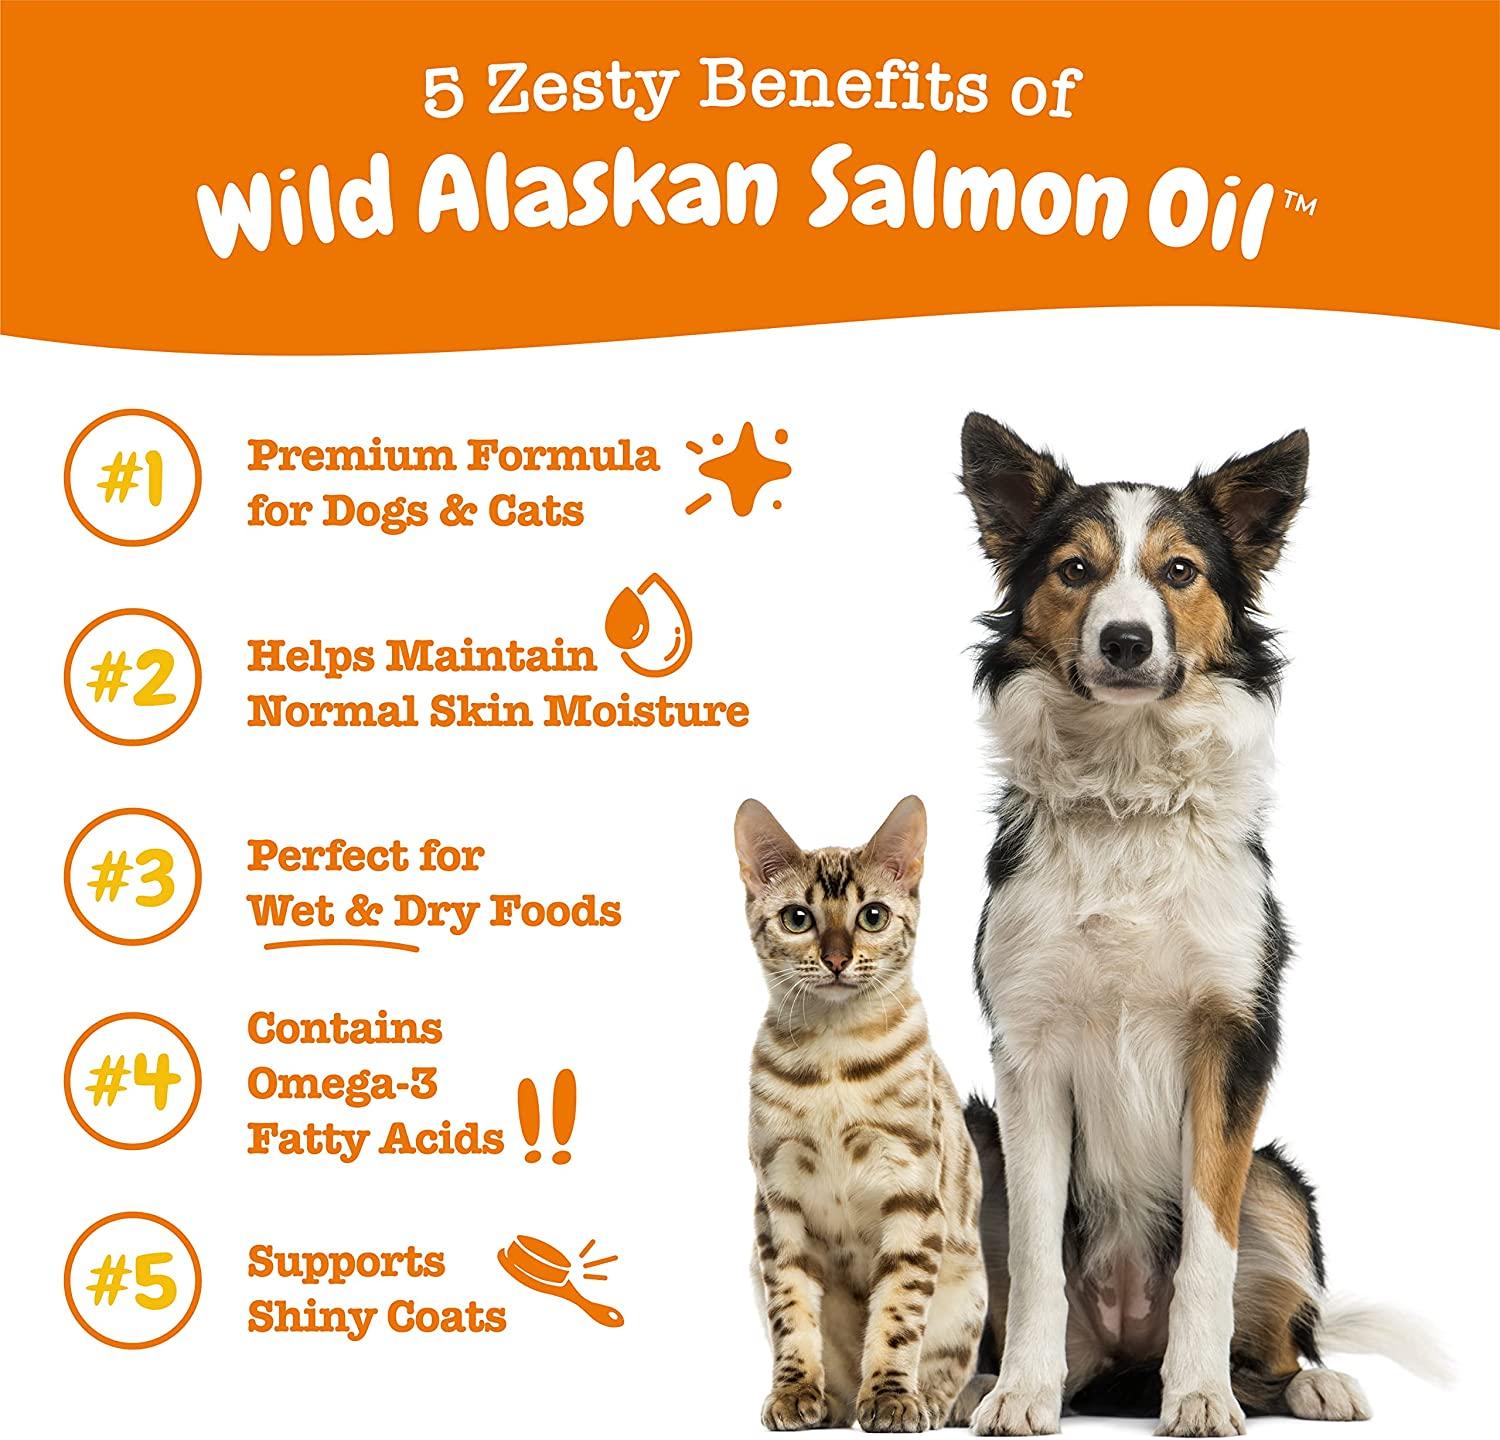 Vital Pet Life Salmon Oil Skin & Coat Health Liquid Cat & Dog Supplement